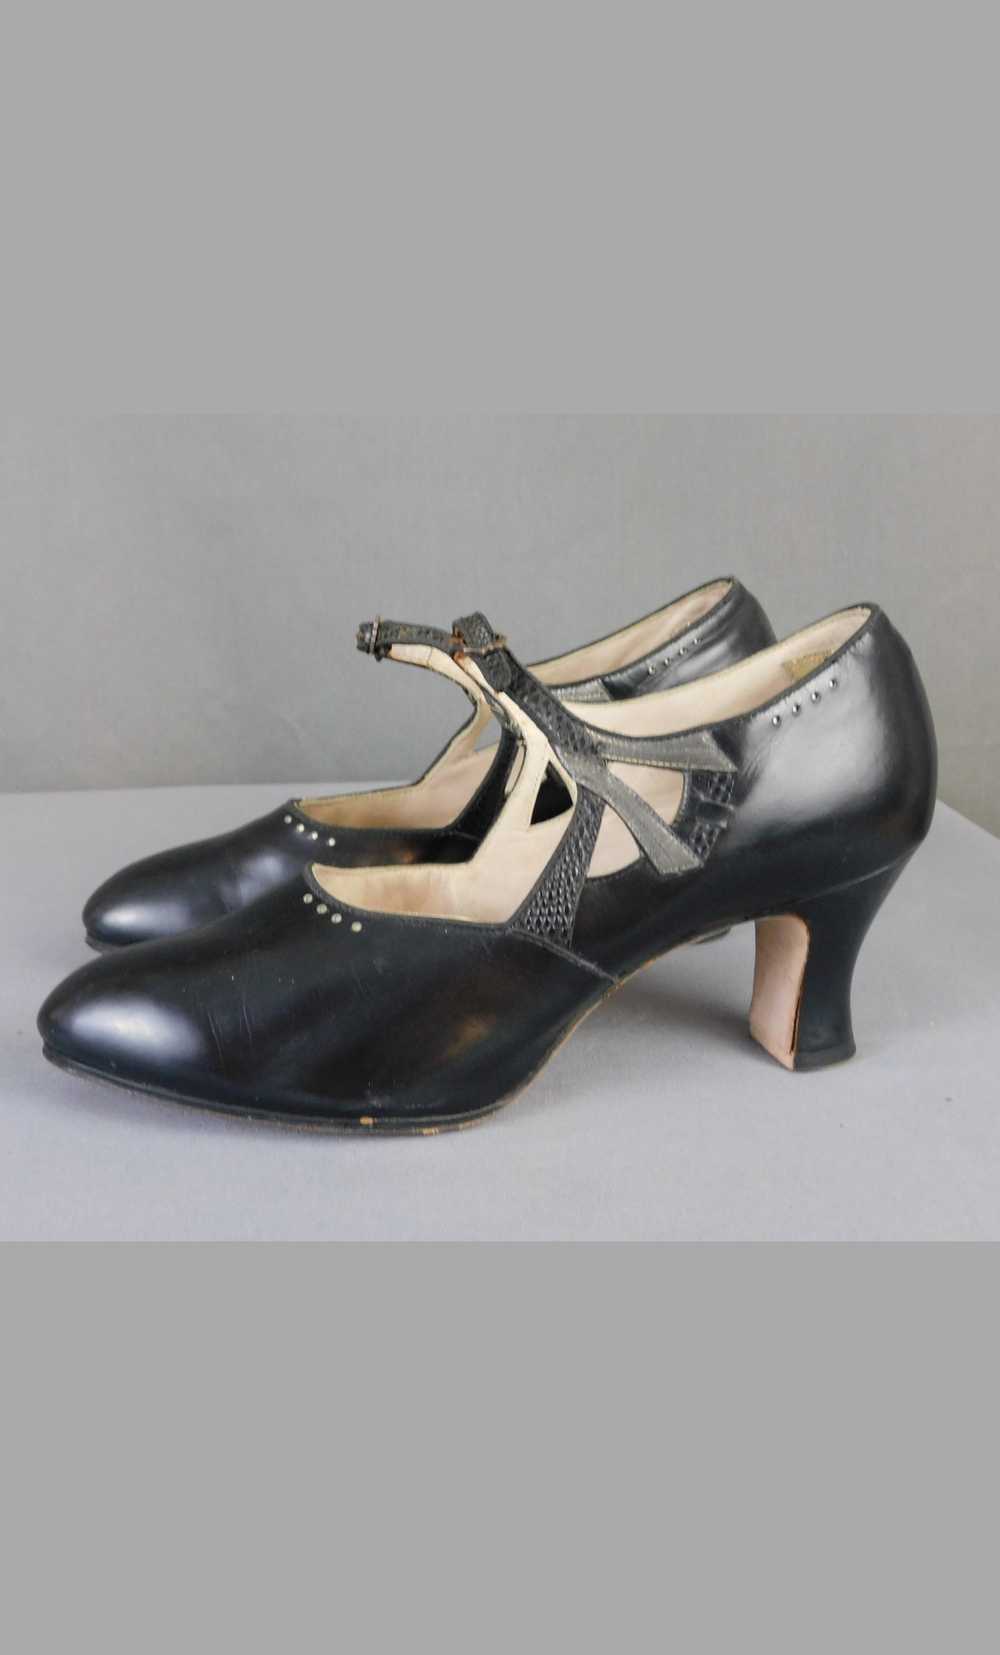 Vintage 1920s Mary Jane Pumps, Black Leather Shoe… - image 1